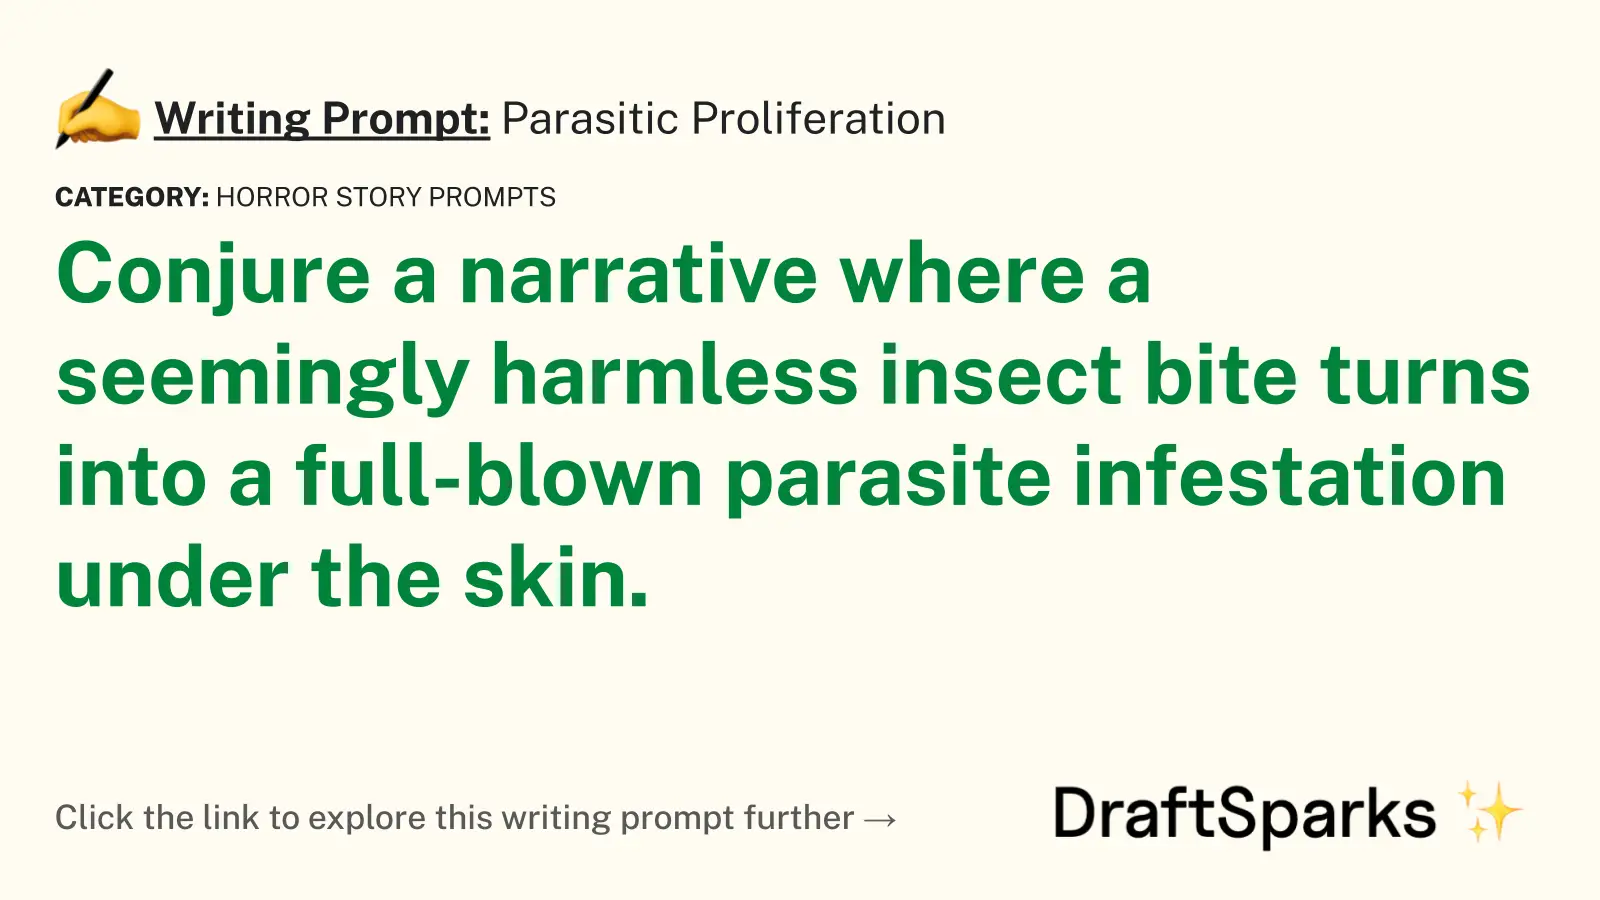 Parasitic Proliferation